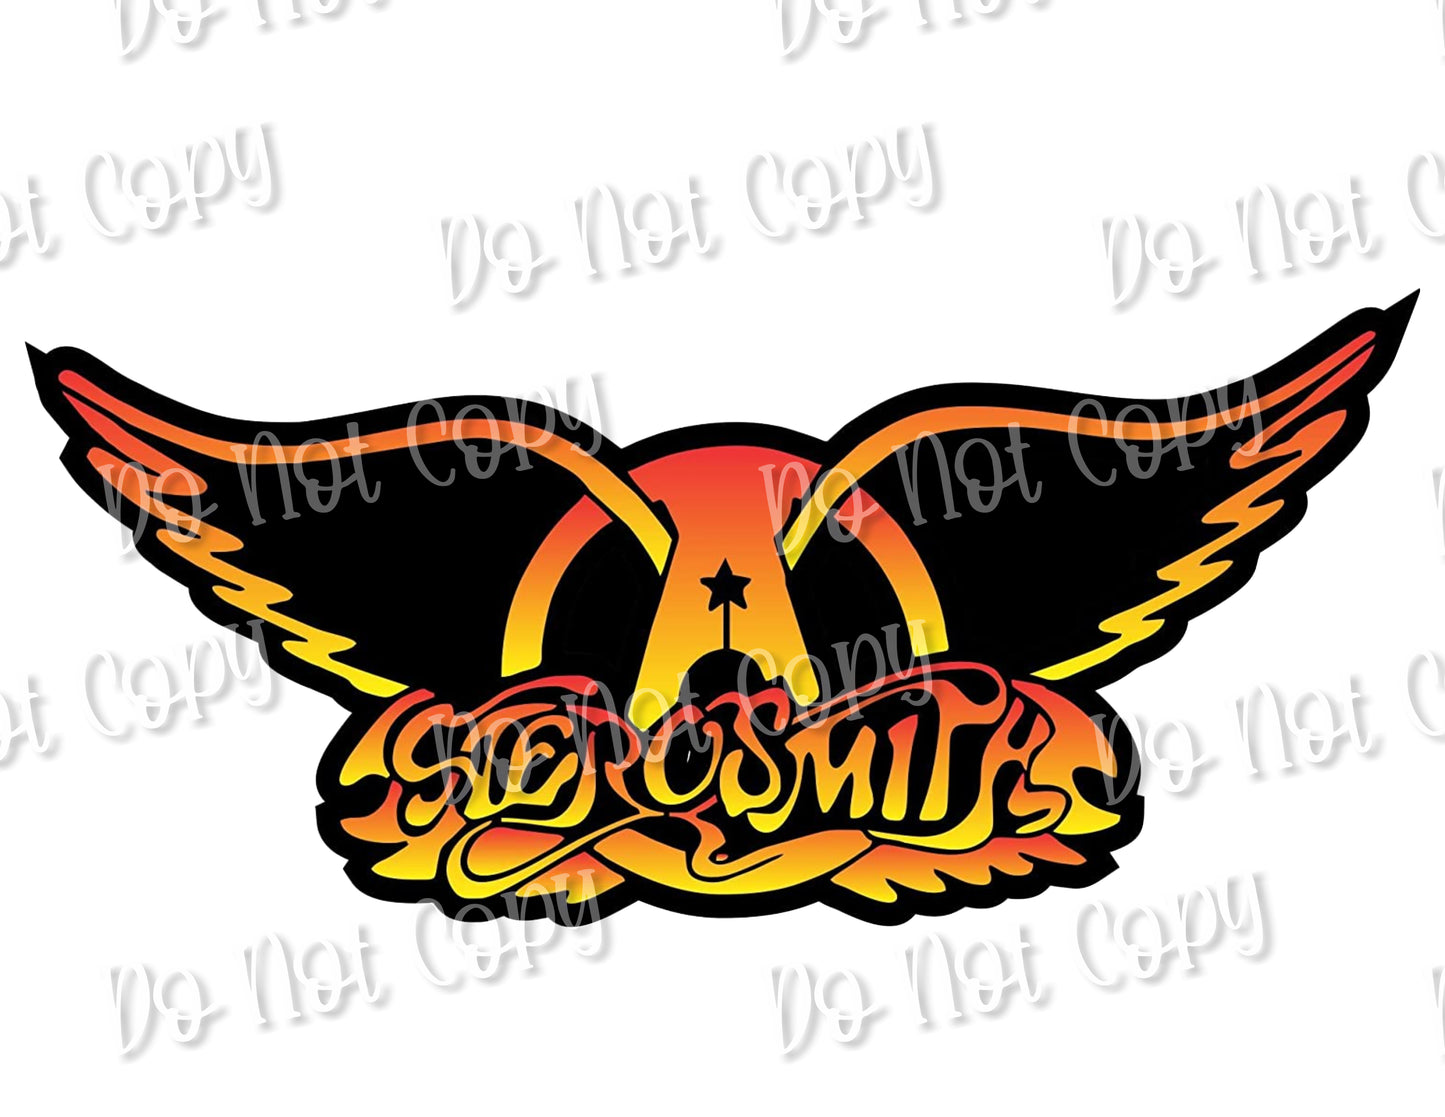 AeroSmith Logo